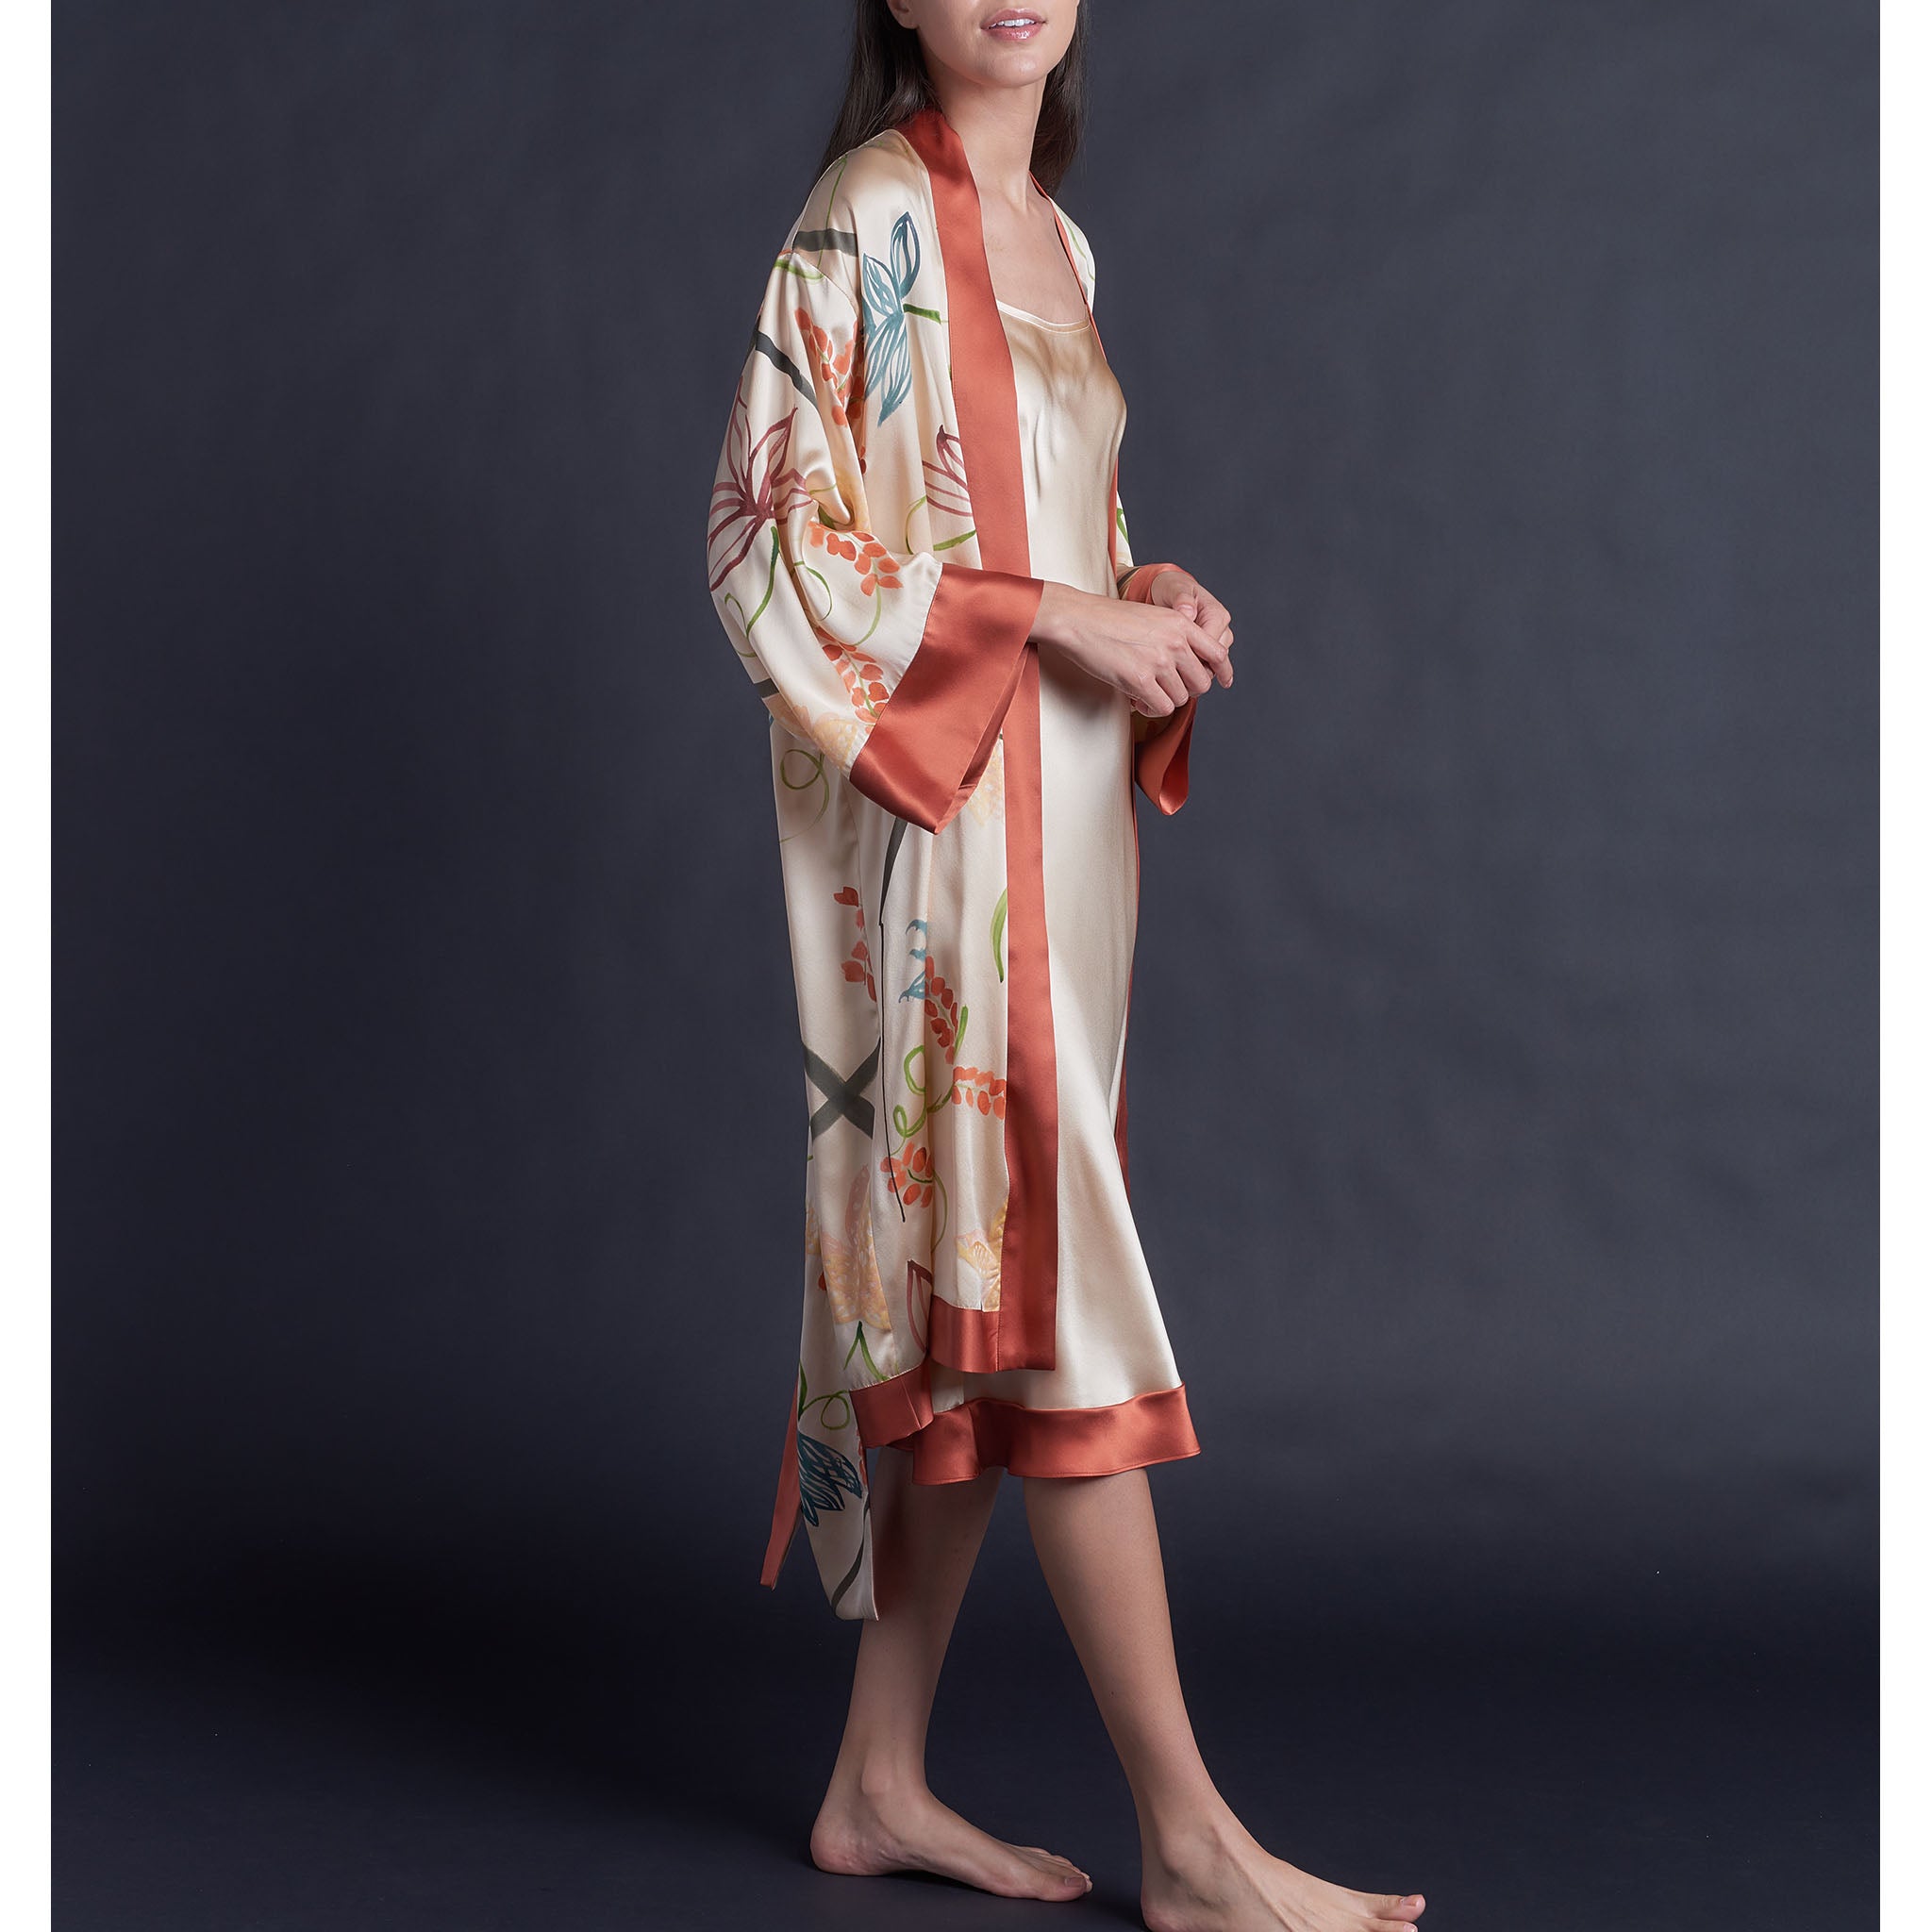 Selene Knee Length Robe in One of Kind Hand Painted Silk Charmeuse